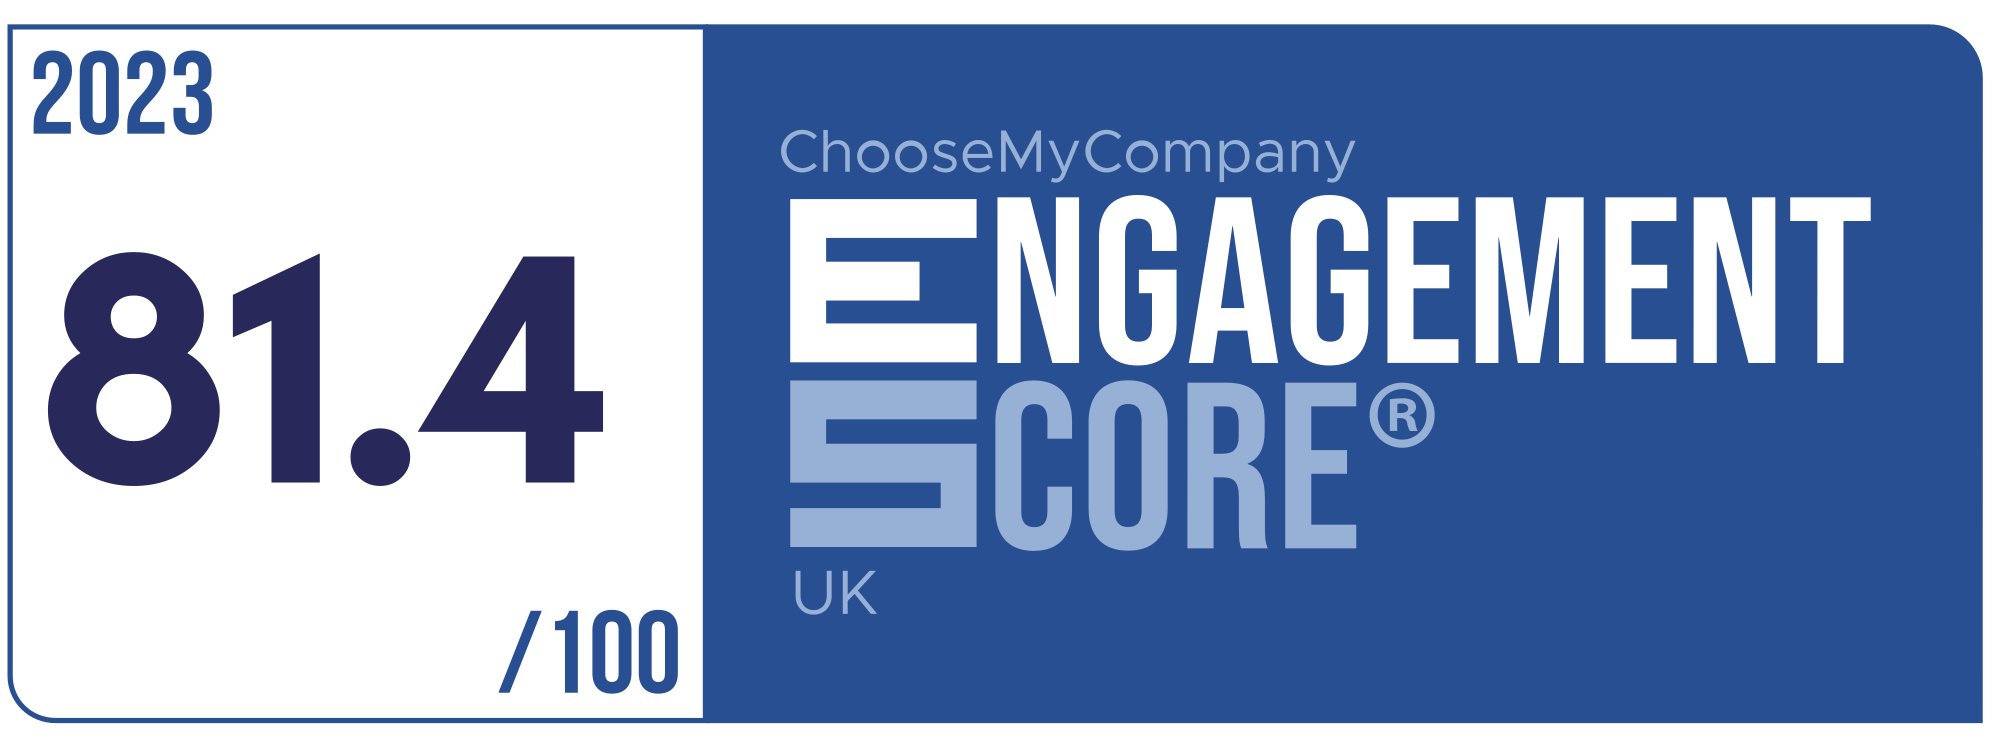 Label Engagement Score 2023 UK